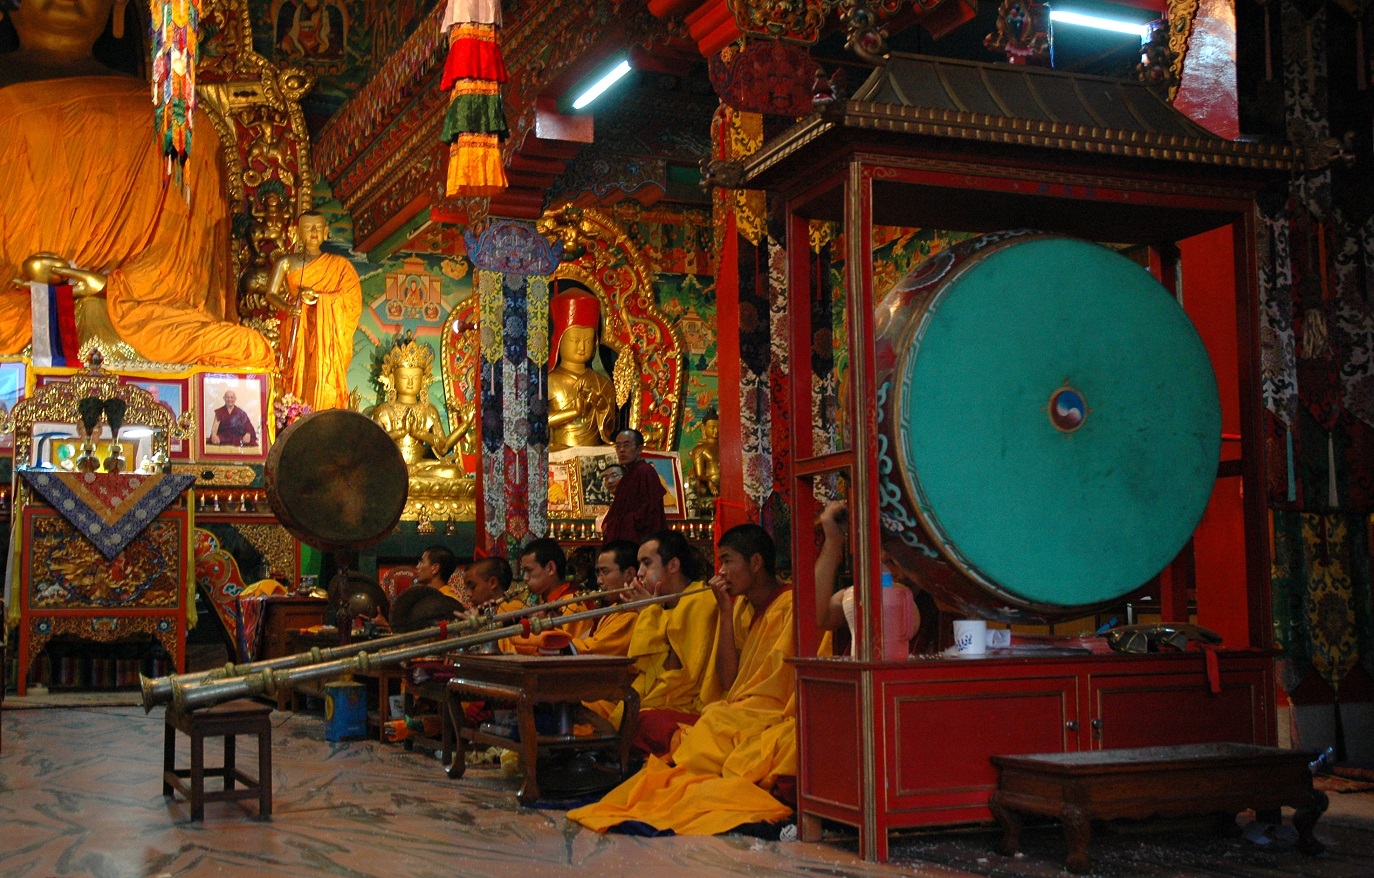 Tibetan_Band_playing_large_drums_Buddha_and_bodhisattva_statues_shrine_room_Sakya_Lamdre_Boudha_Kathmandu_Nepal.jpg